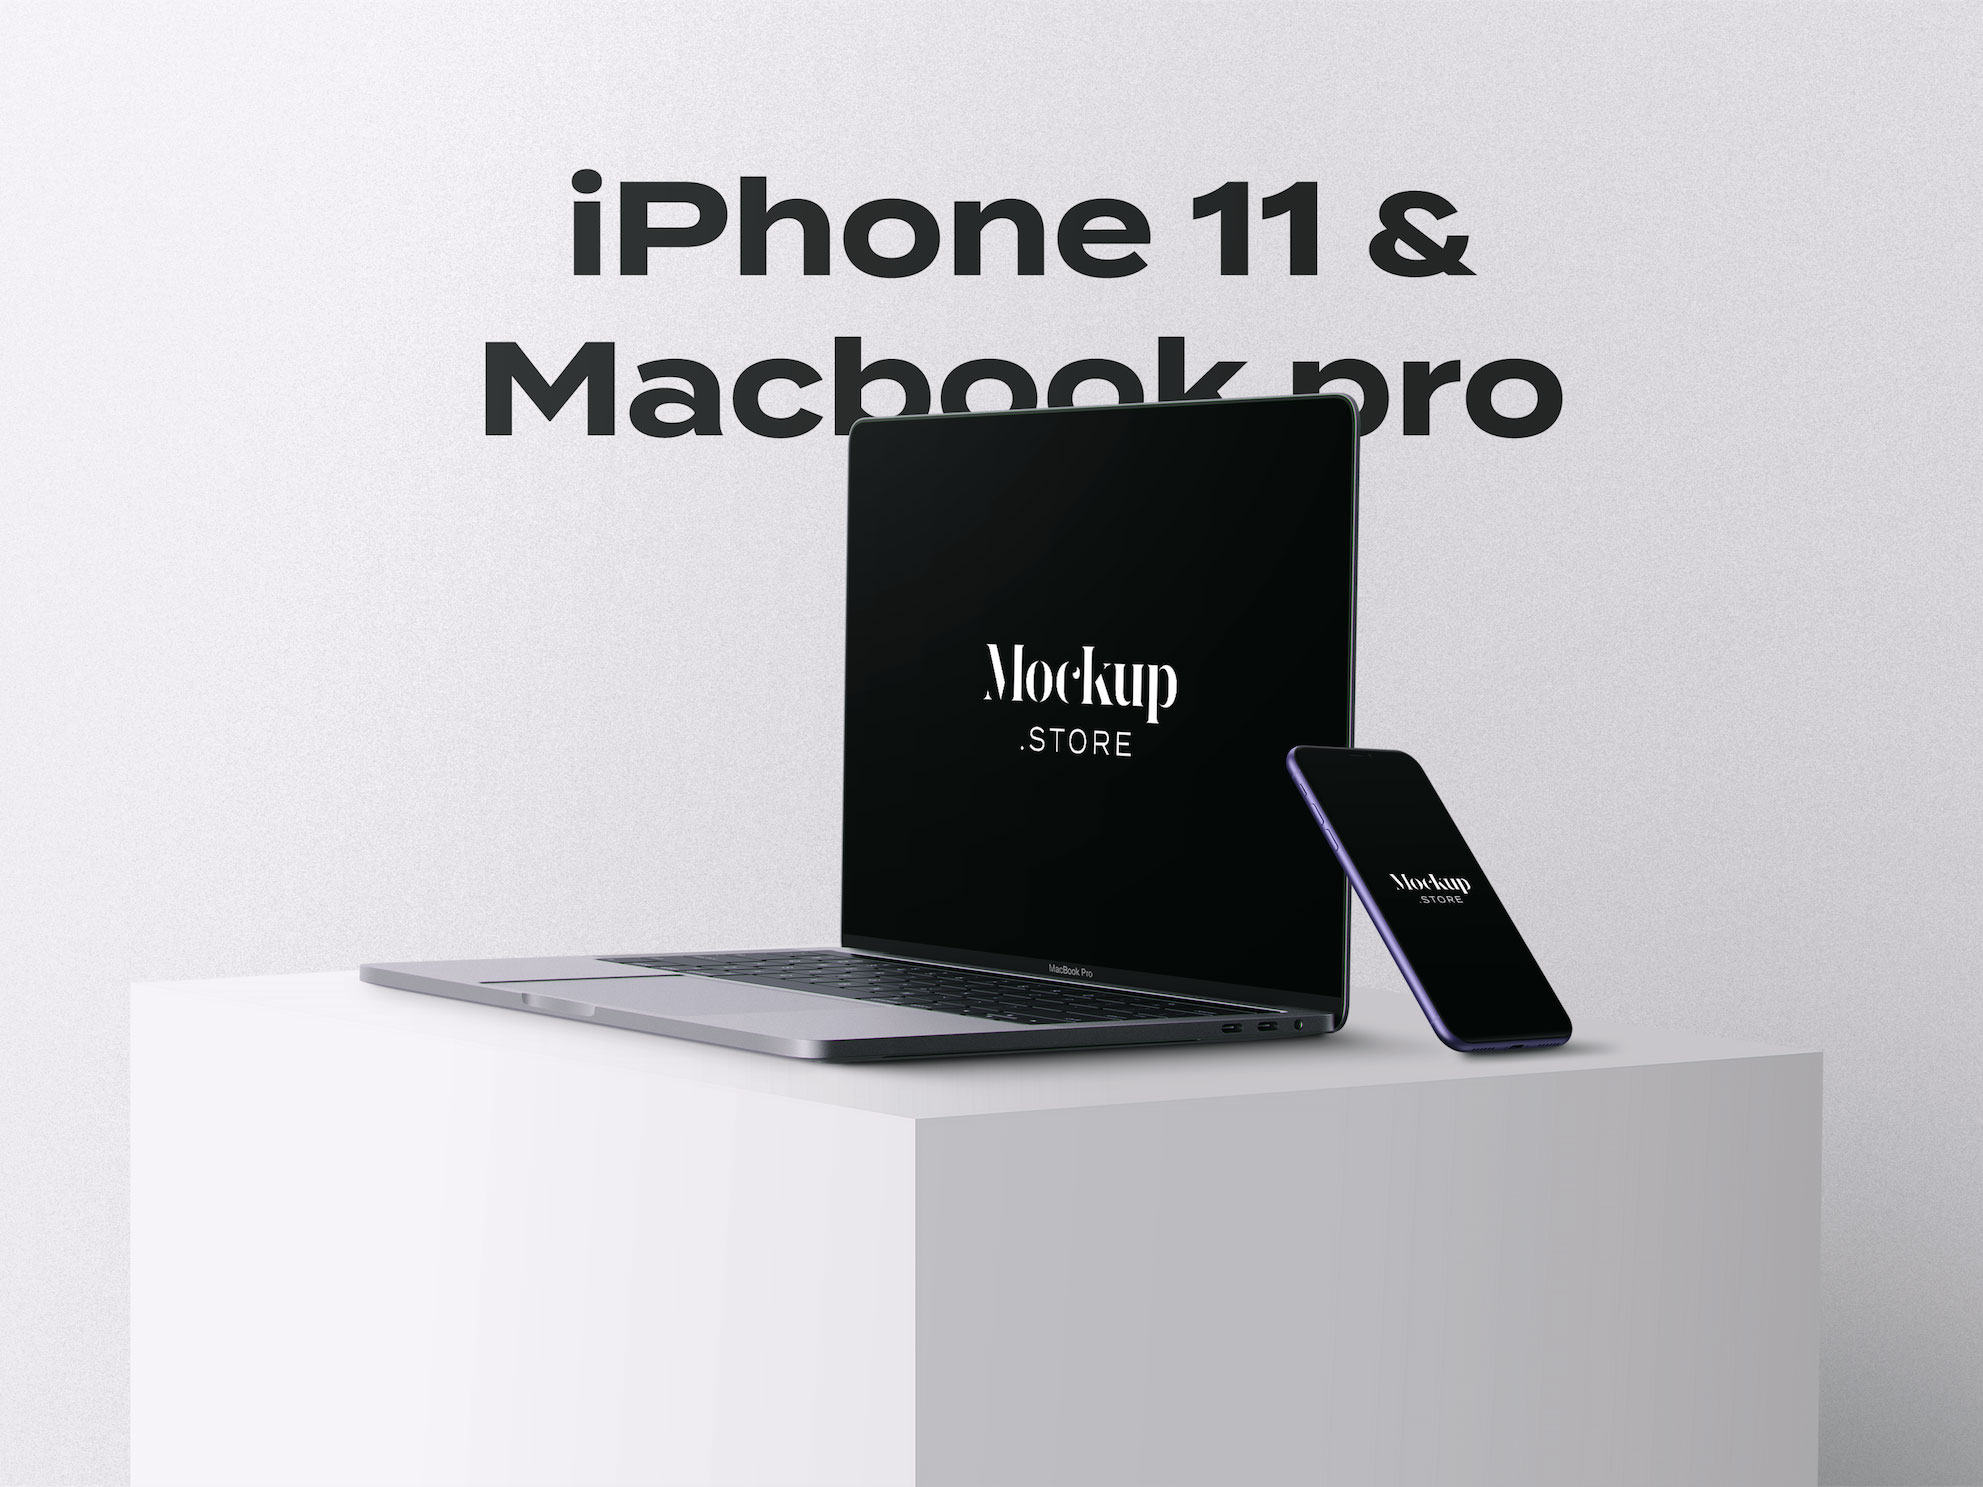 iPhone 11 & Macbook Pro 样机mockup .psd素材